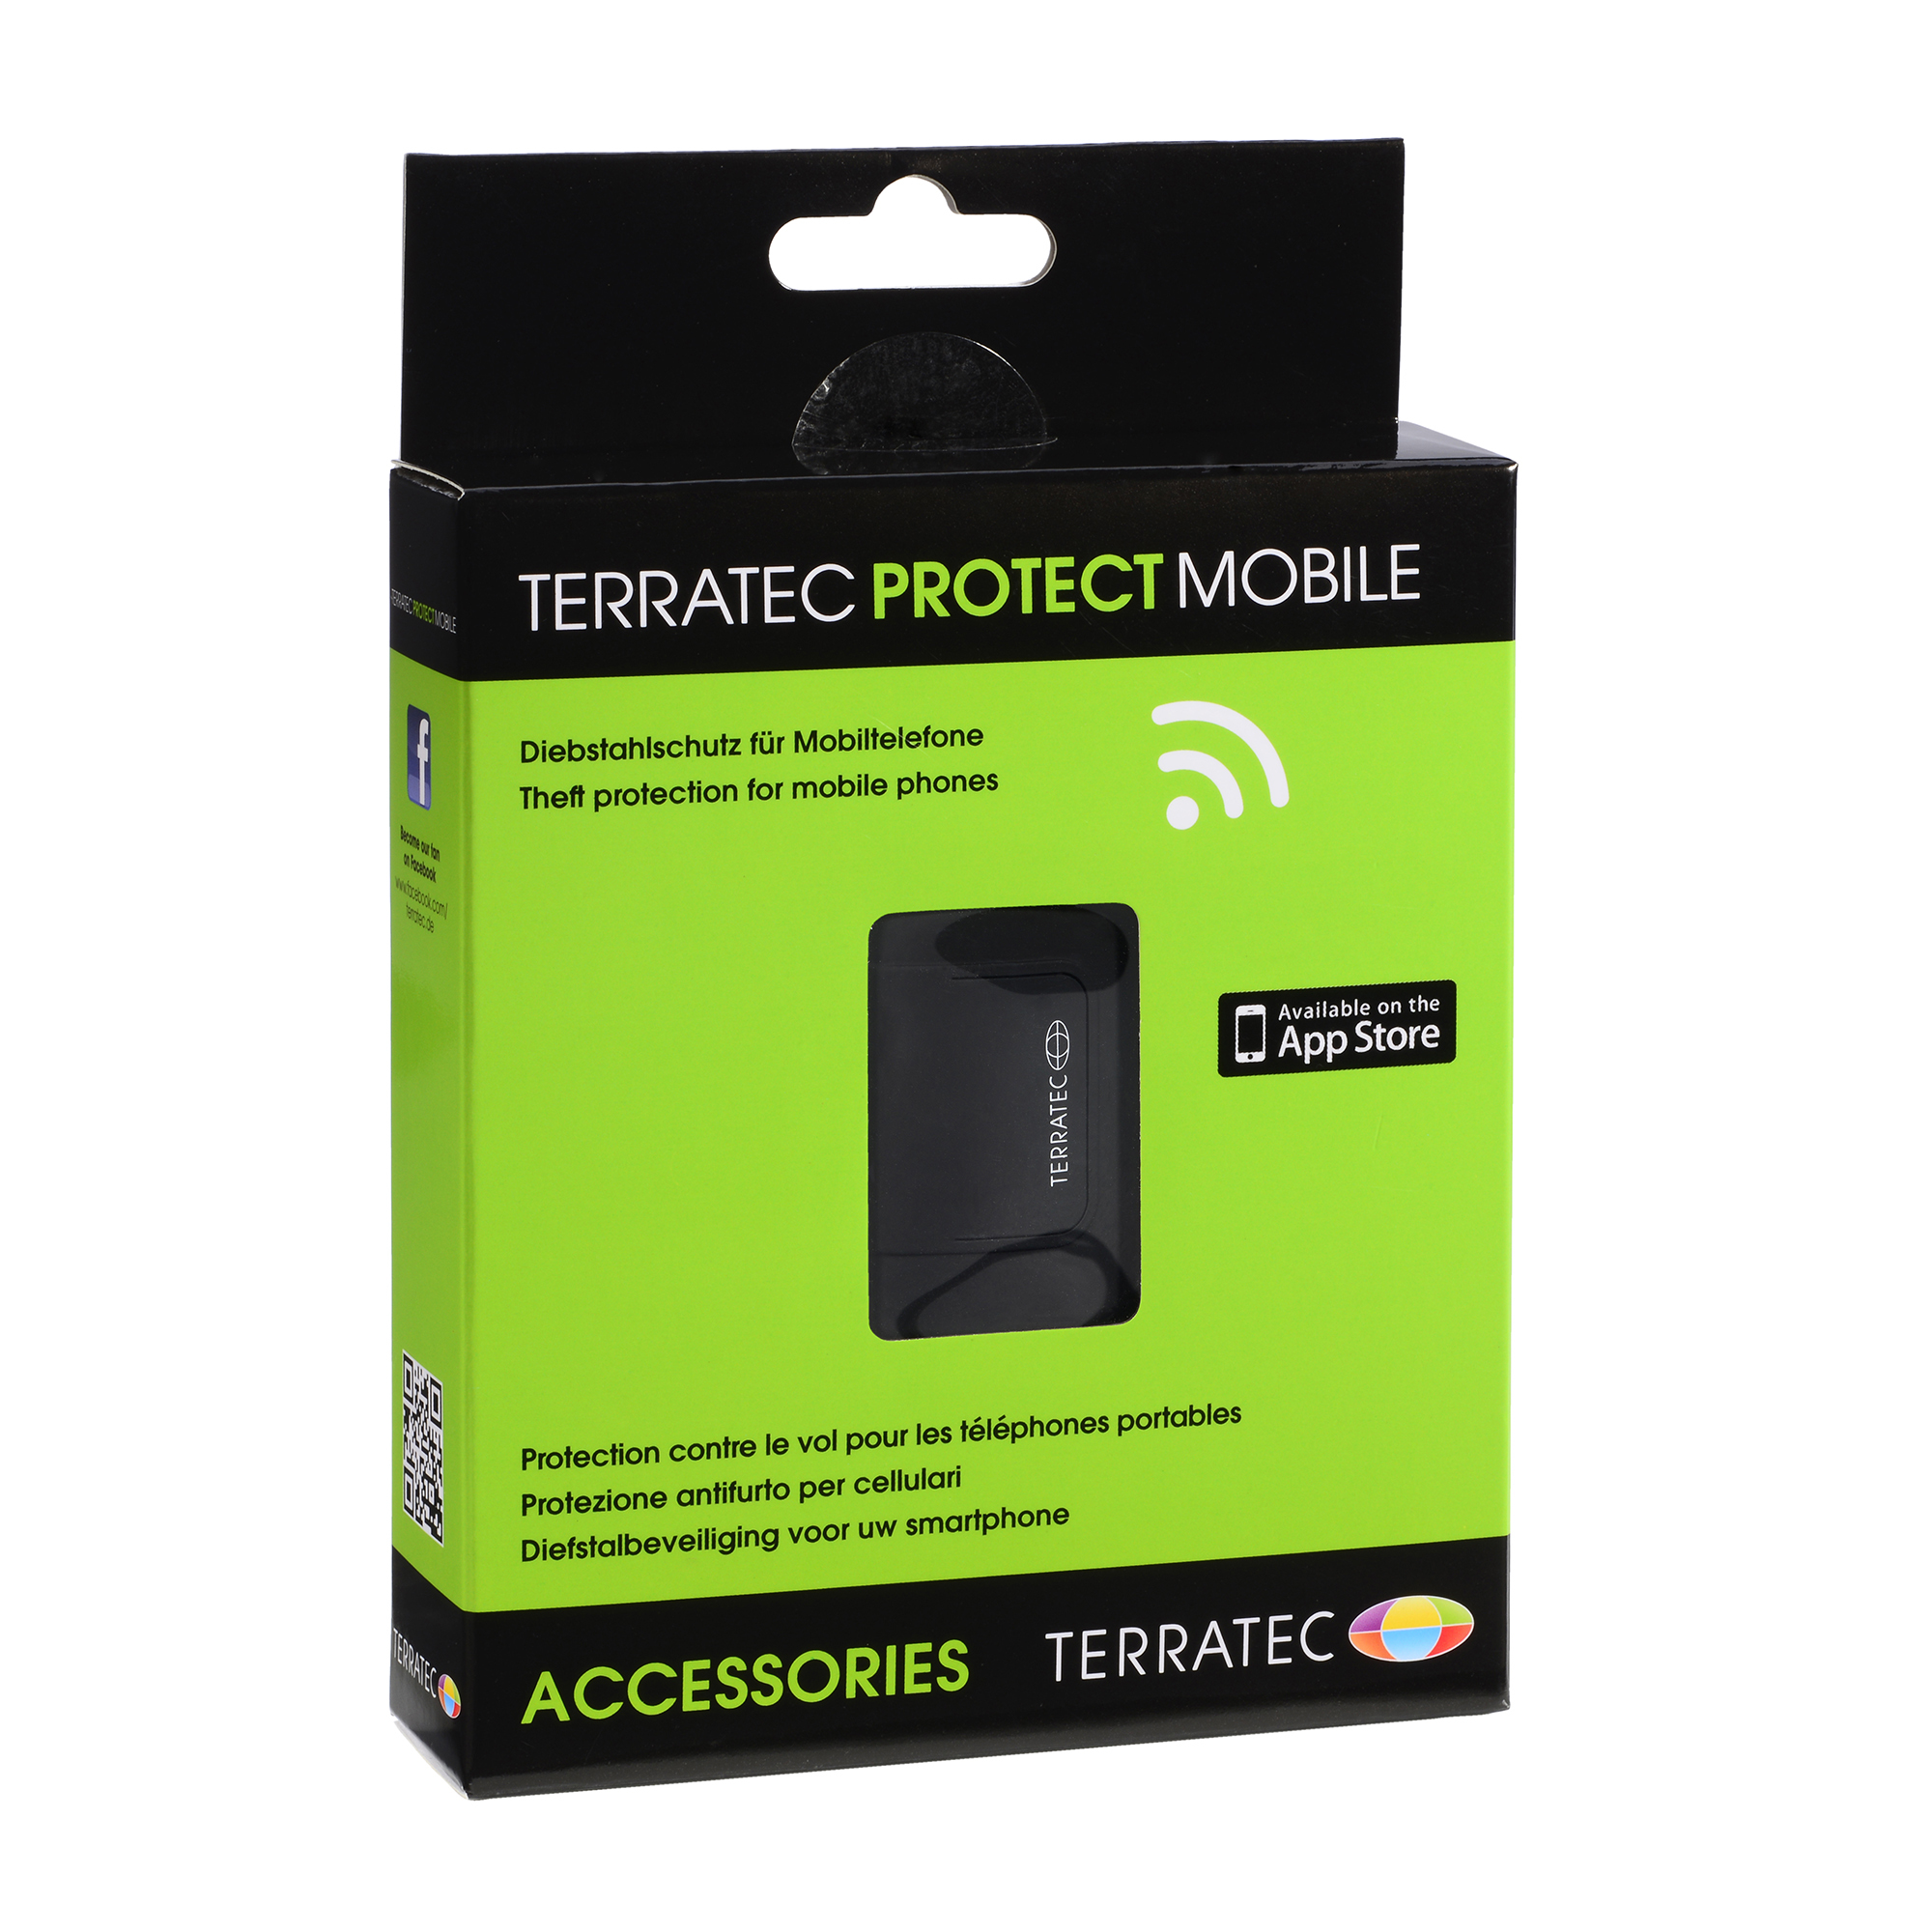 TerraTec PROTECT mobile - Drahtlos-Sicherheits-Tag für Handy